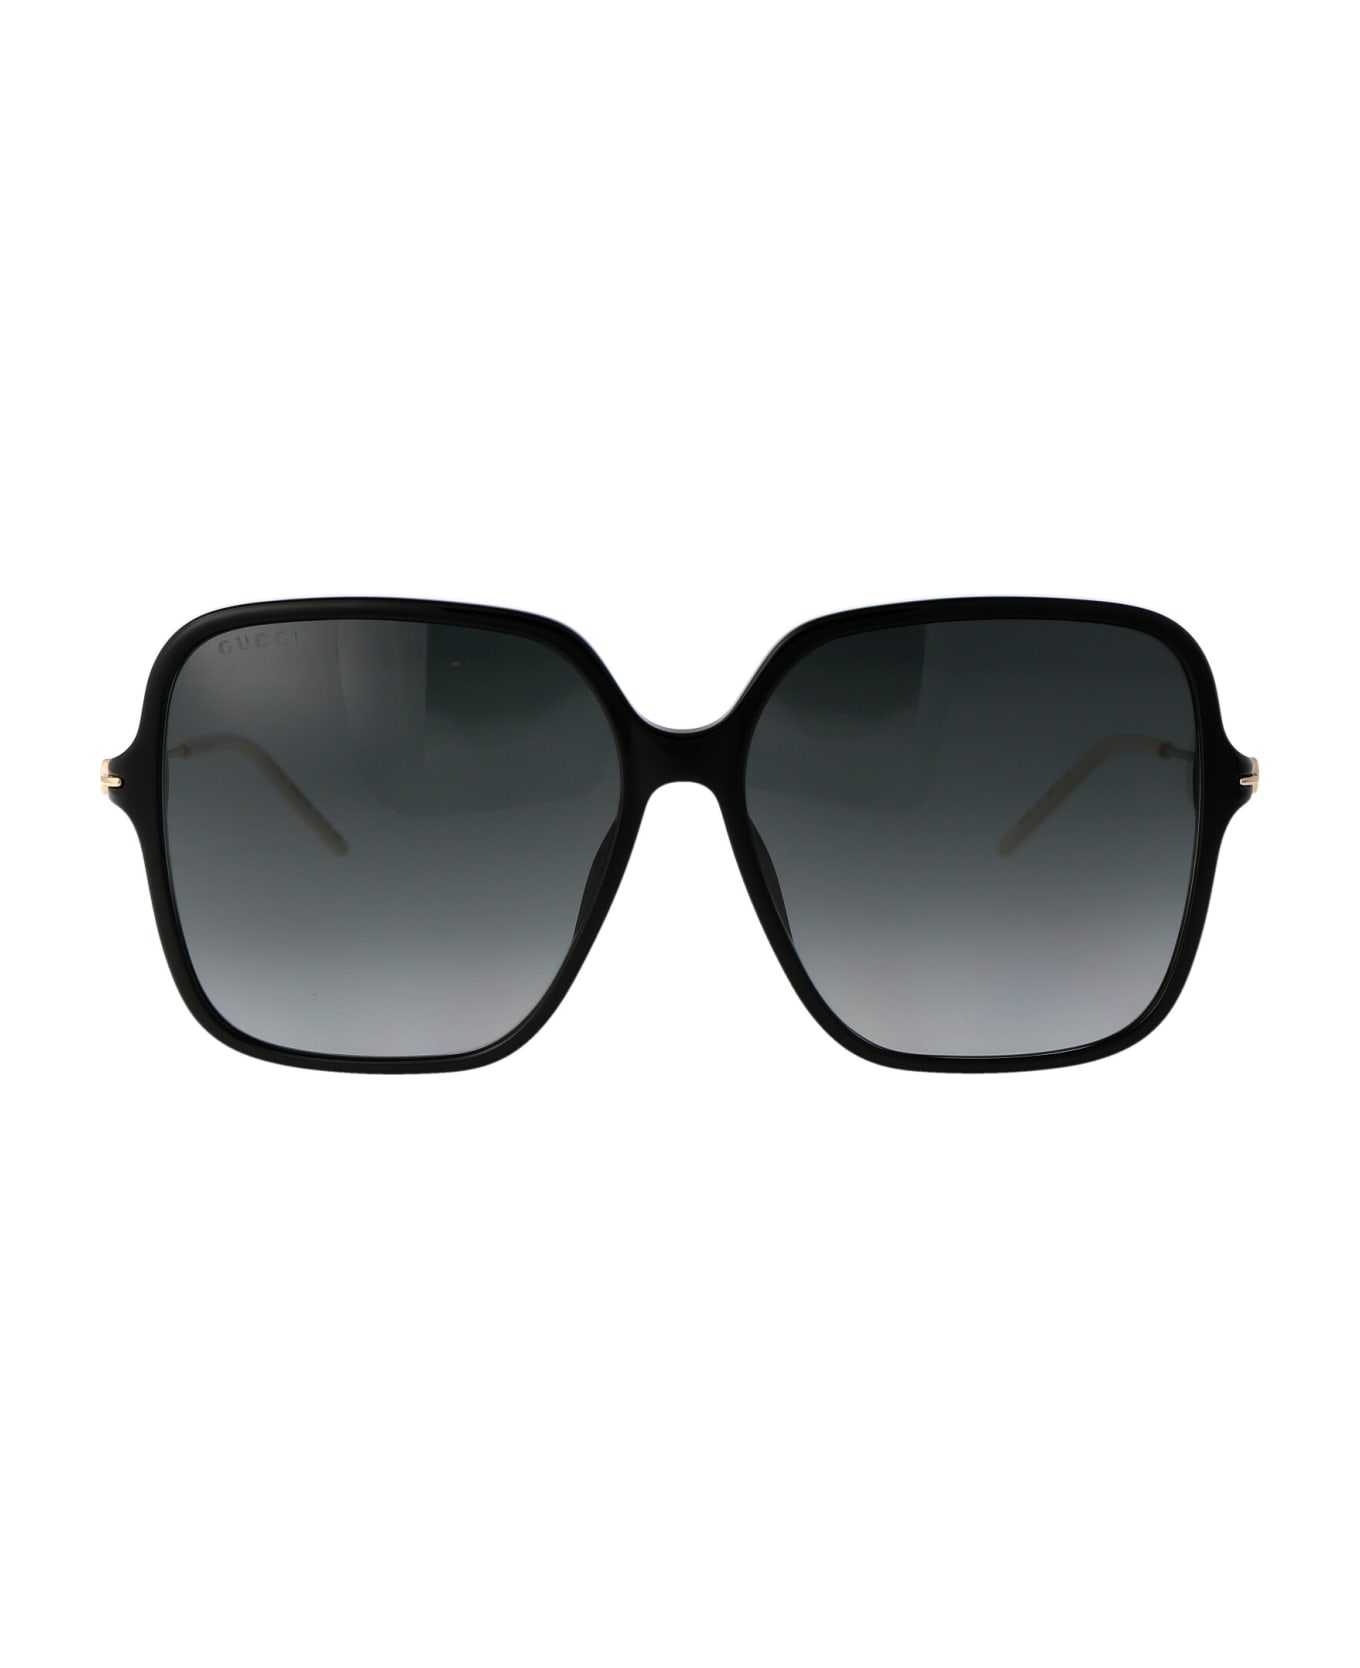 Gucci Eyewear Gg1267s Sunglasses - 001 BLACK GOLD GREY サングラス